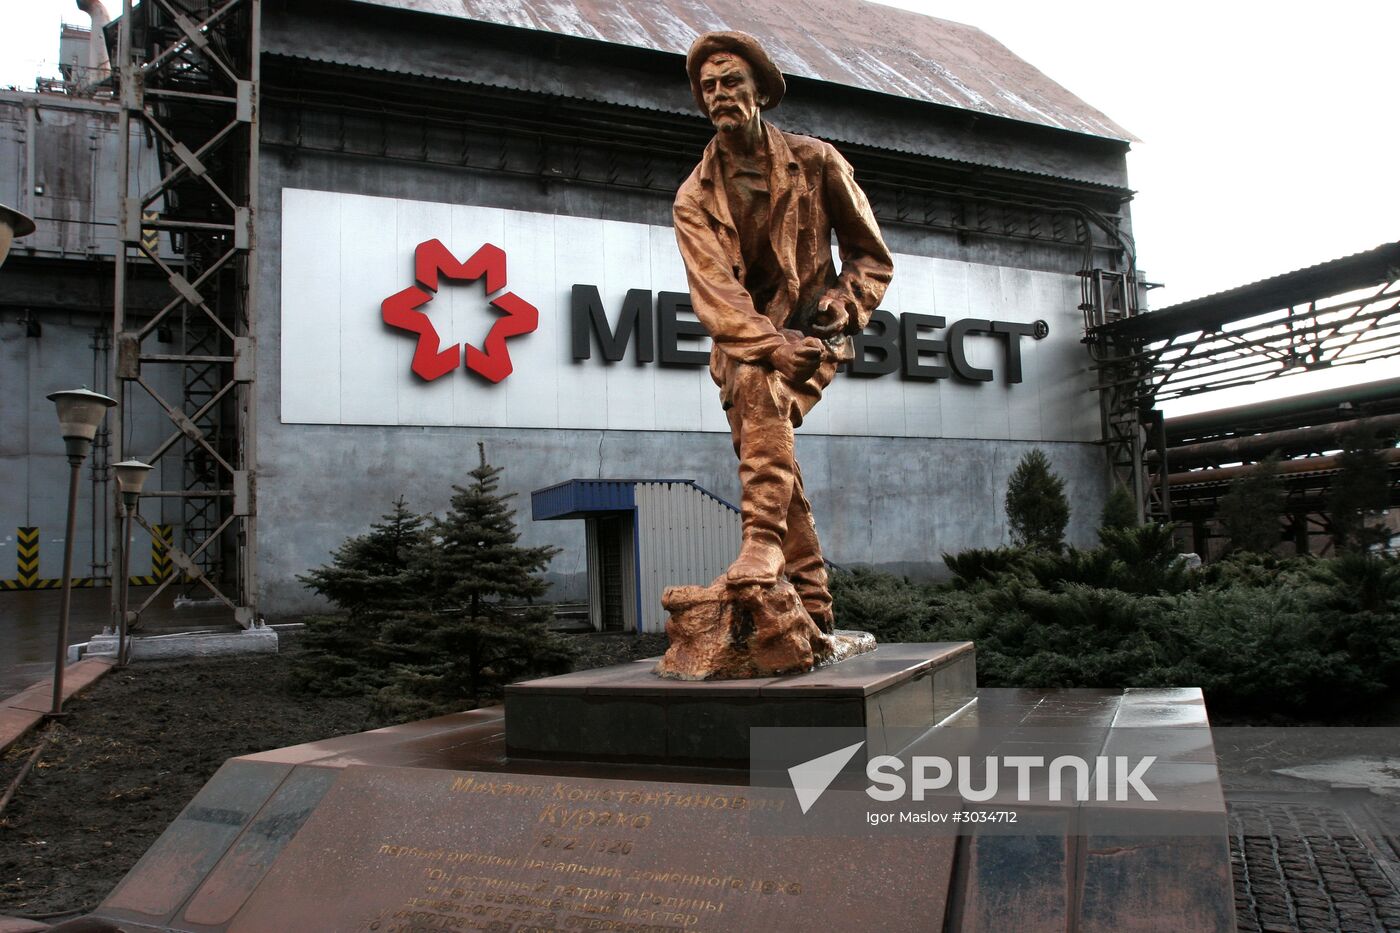 Yenakiyevo iron & steel works shut down in the Donetsk Region